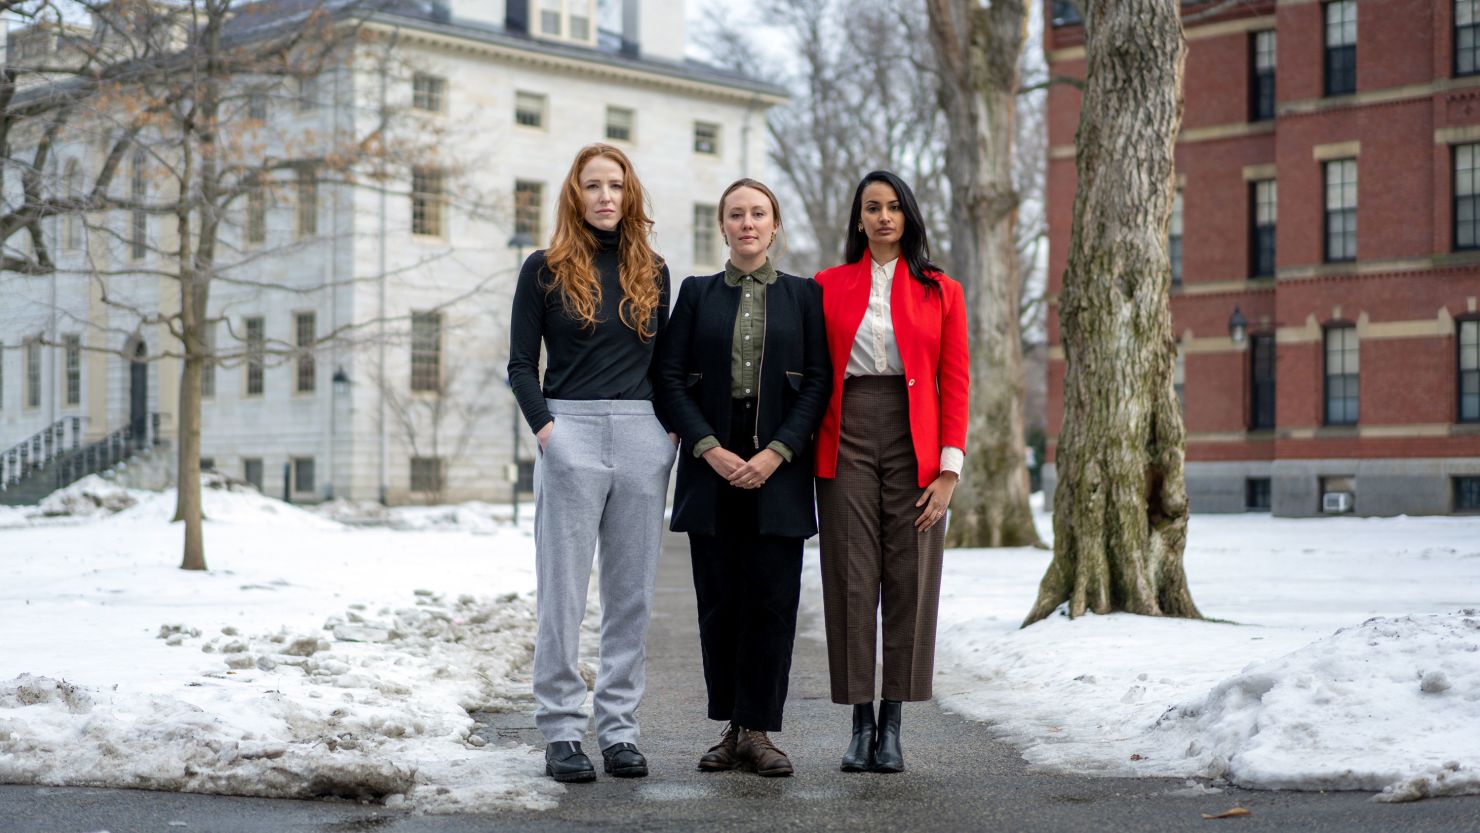 From left, Margaret Czerwienski, Lilia Kilburn and Amulya Mandava are pictured at Harvard University in Cambridge, Massachusetts, on February 7, 2022.